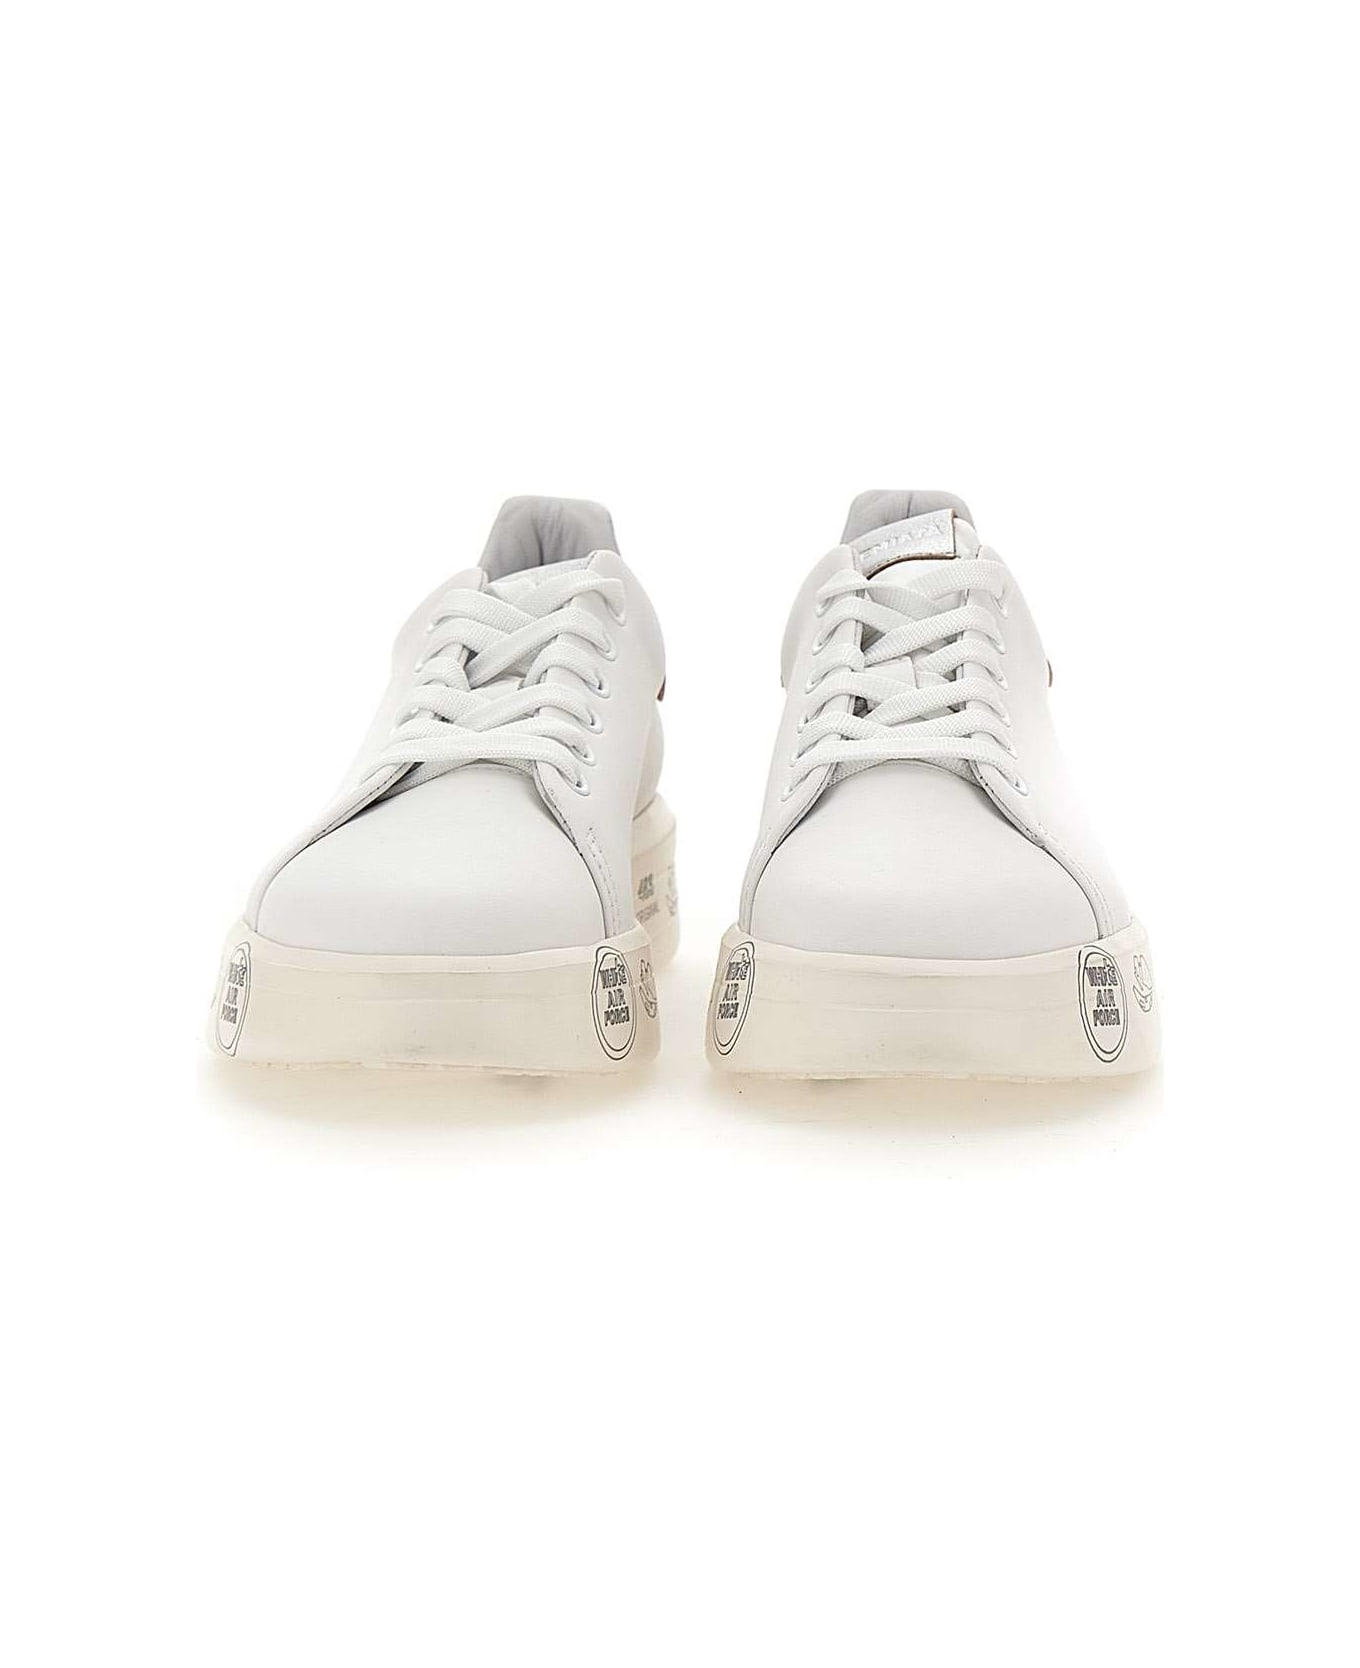 Premiata "belle6823" Leather Sneakers - WHITE